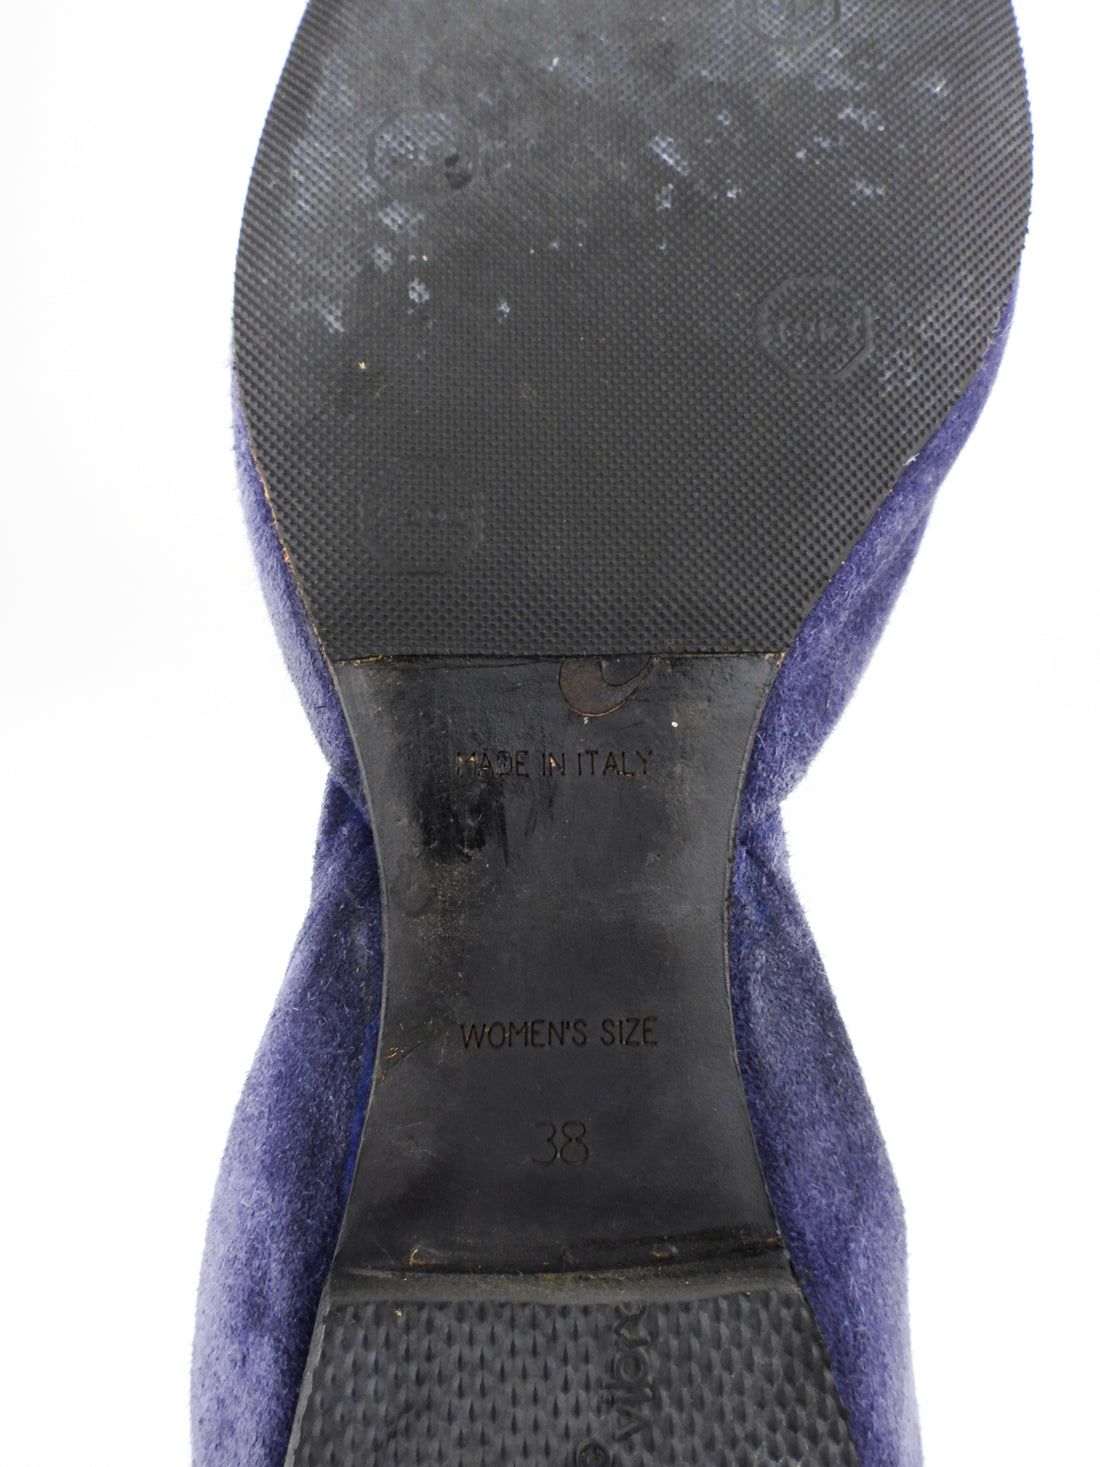 Roger Vivier Blue Suede Leather Chips Flat Shoes - 38